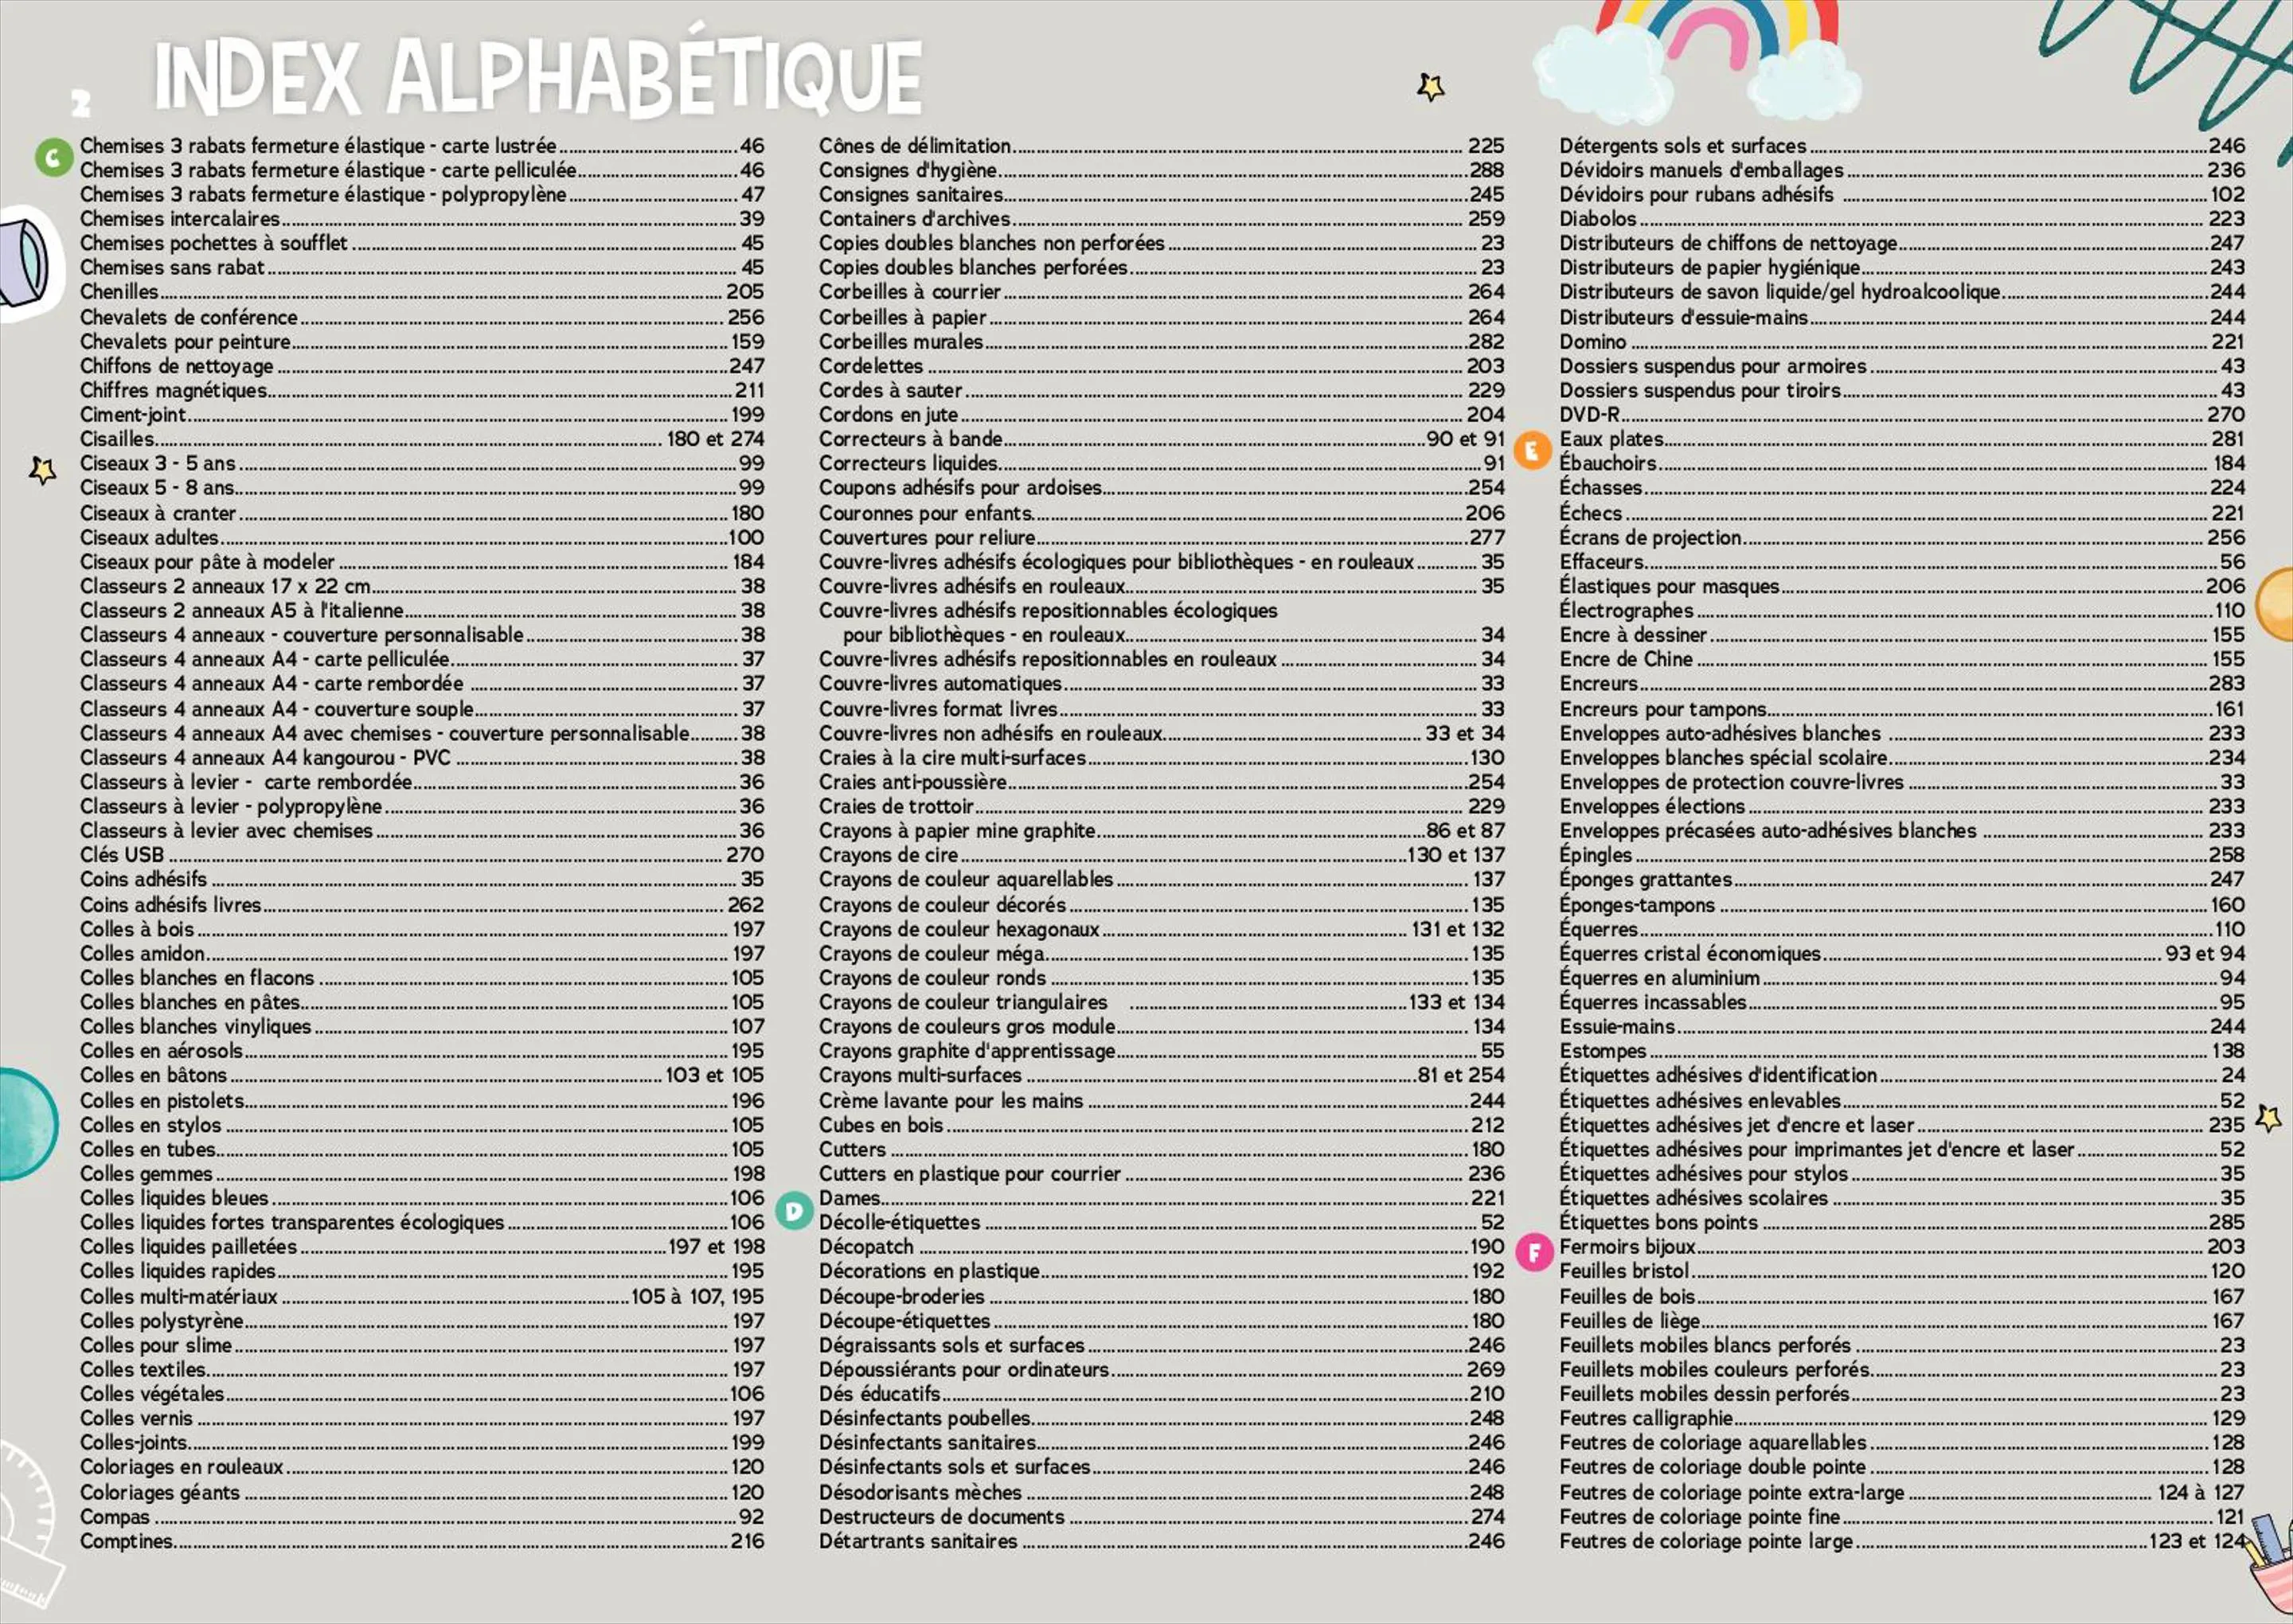 Catalogue Catalogue Hyperburo, page 00004